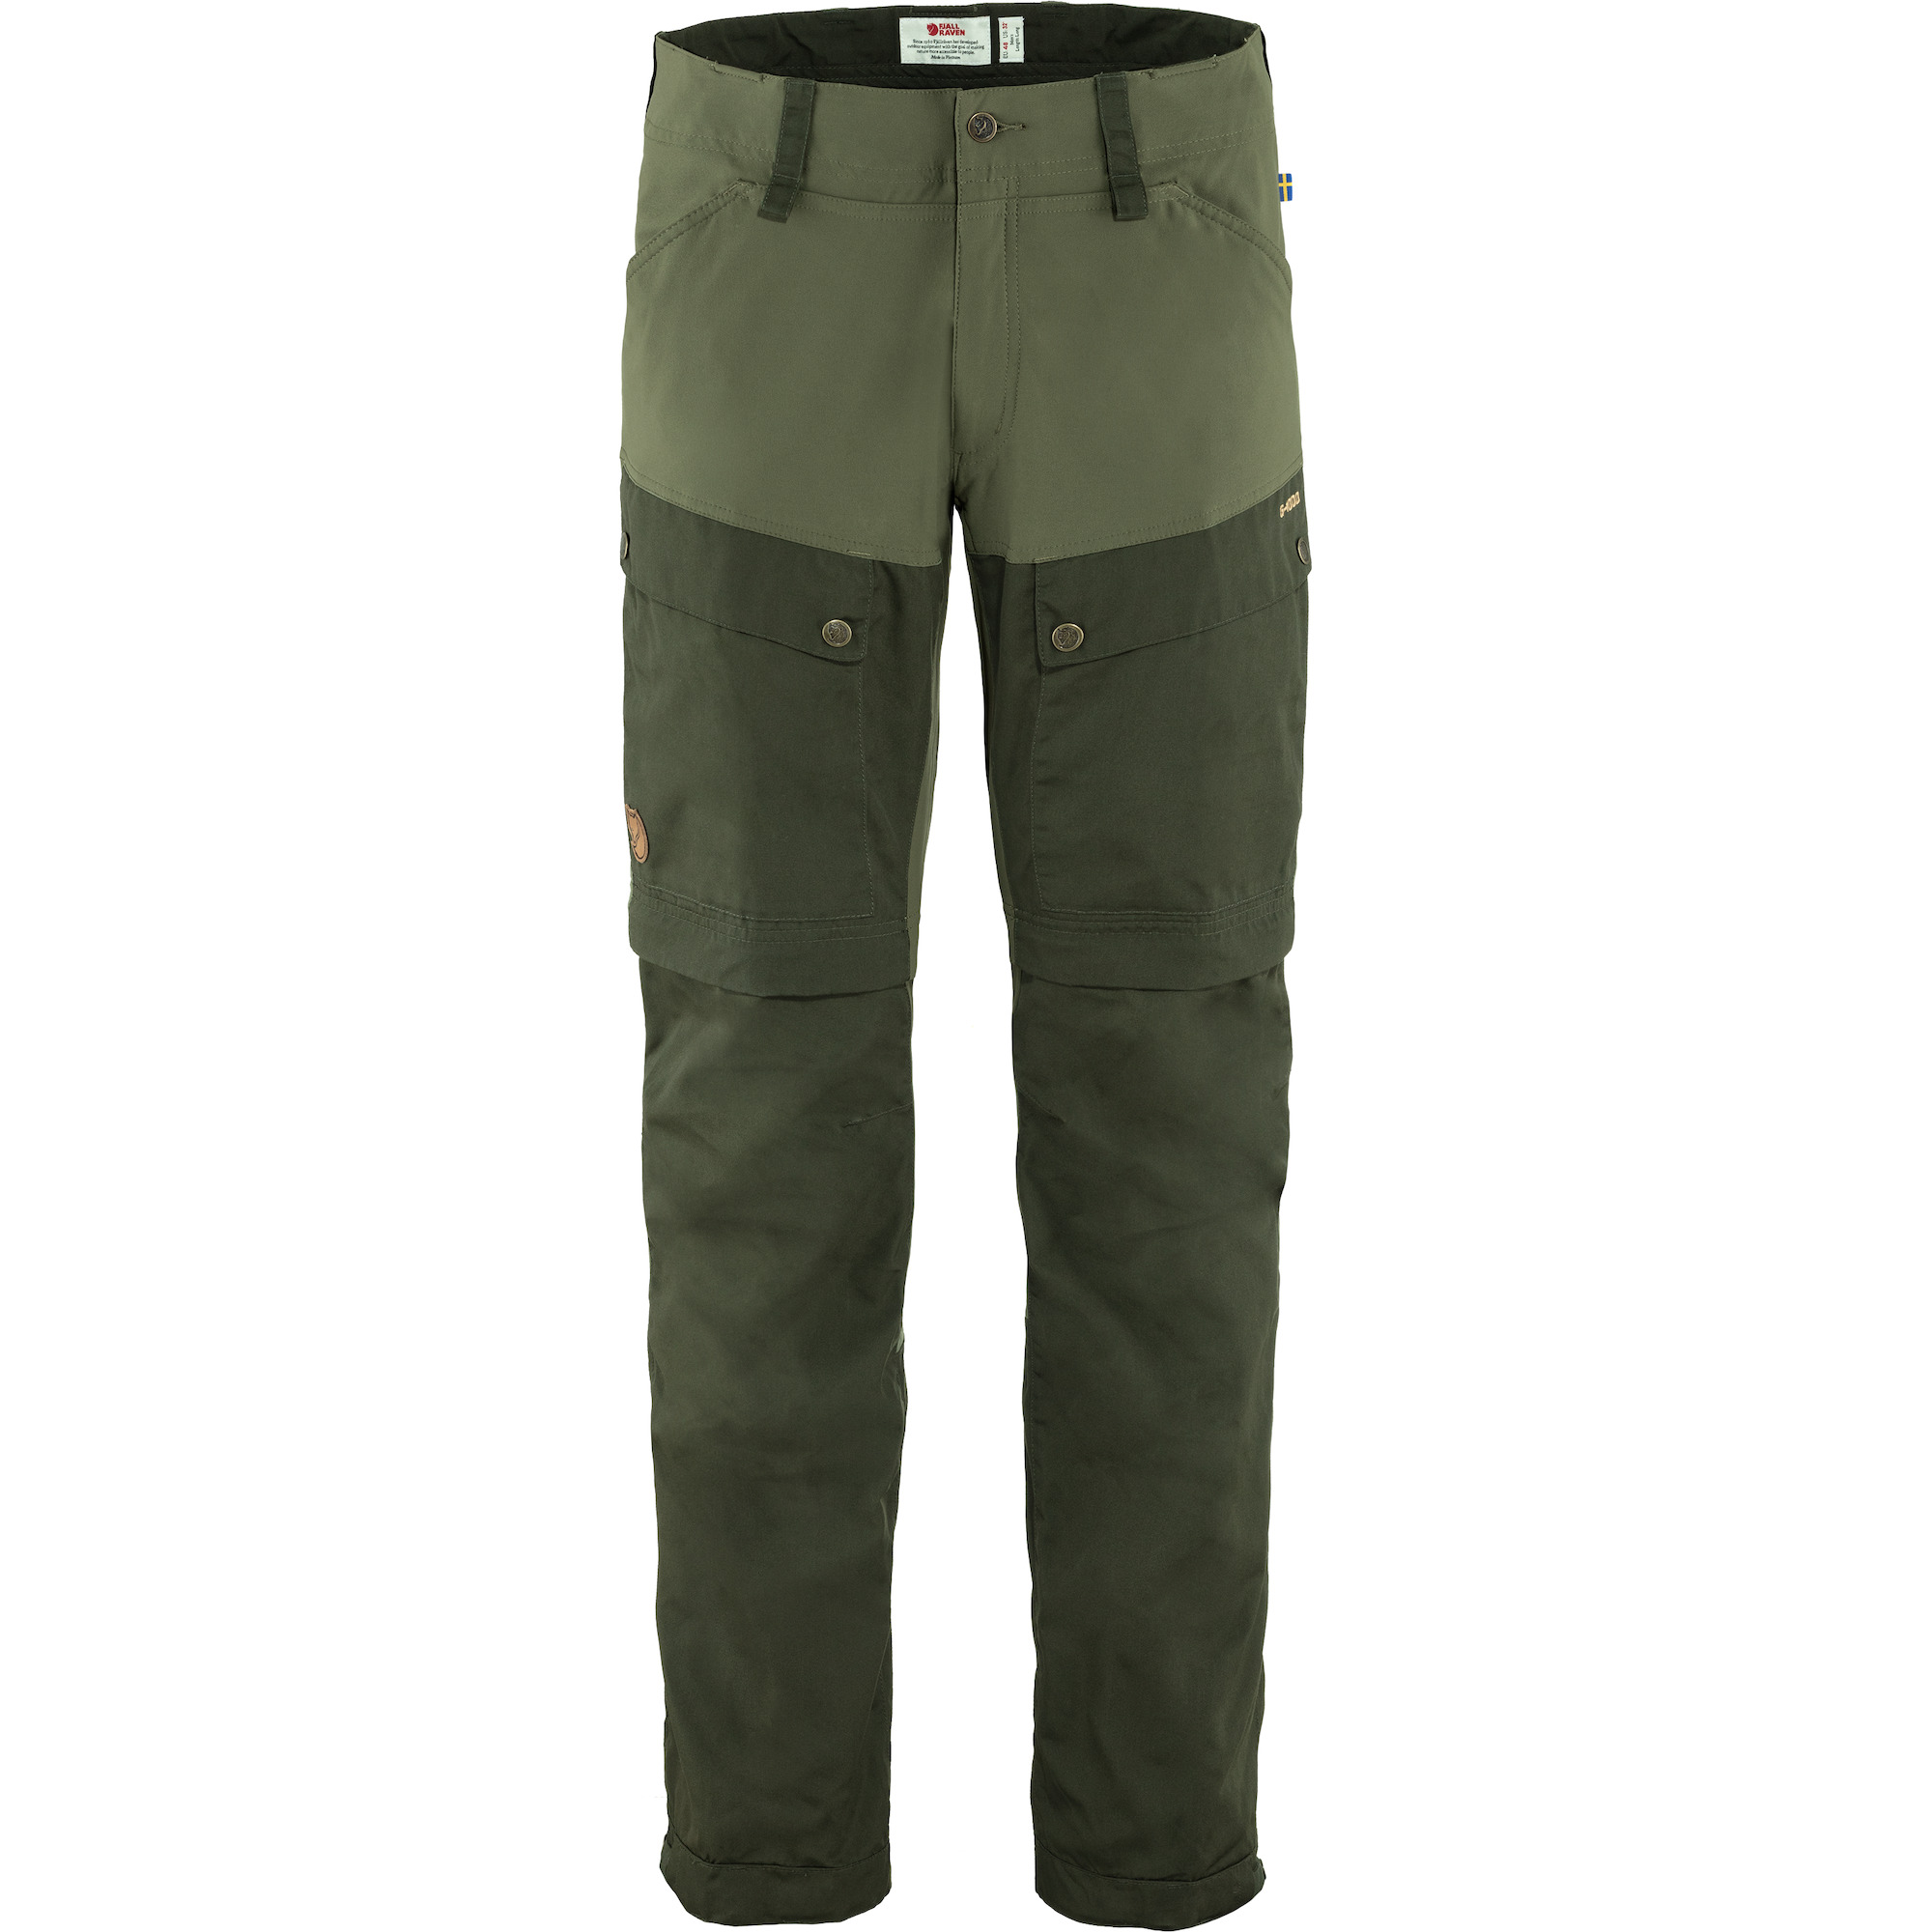 Navy Blue 36                  EU MEN FASHION Trousers Shorts discount 63% Primark slacks 